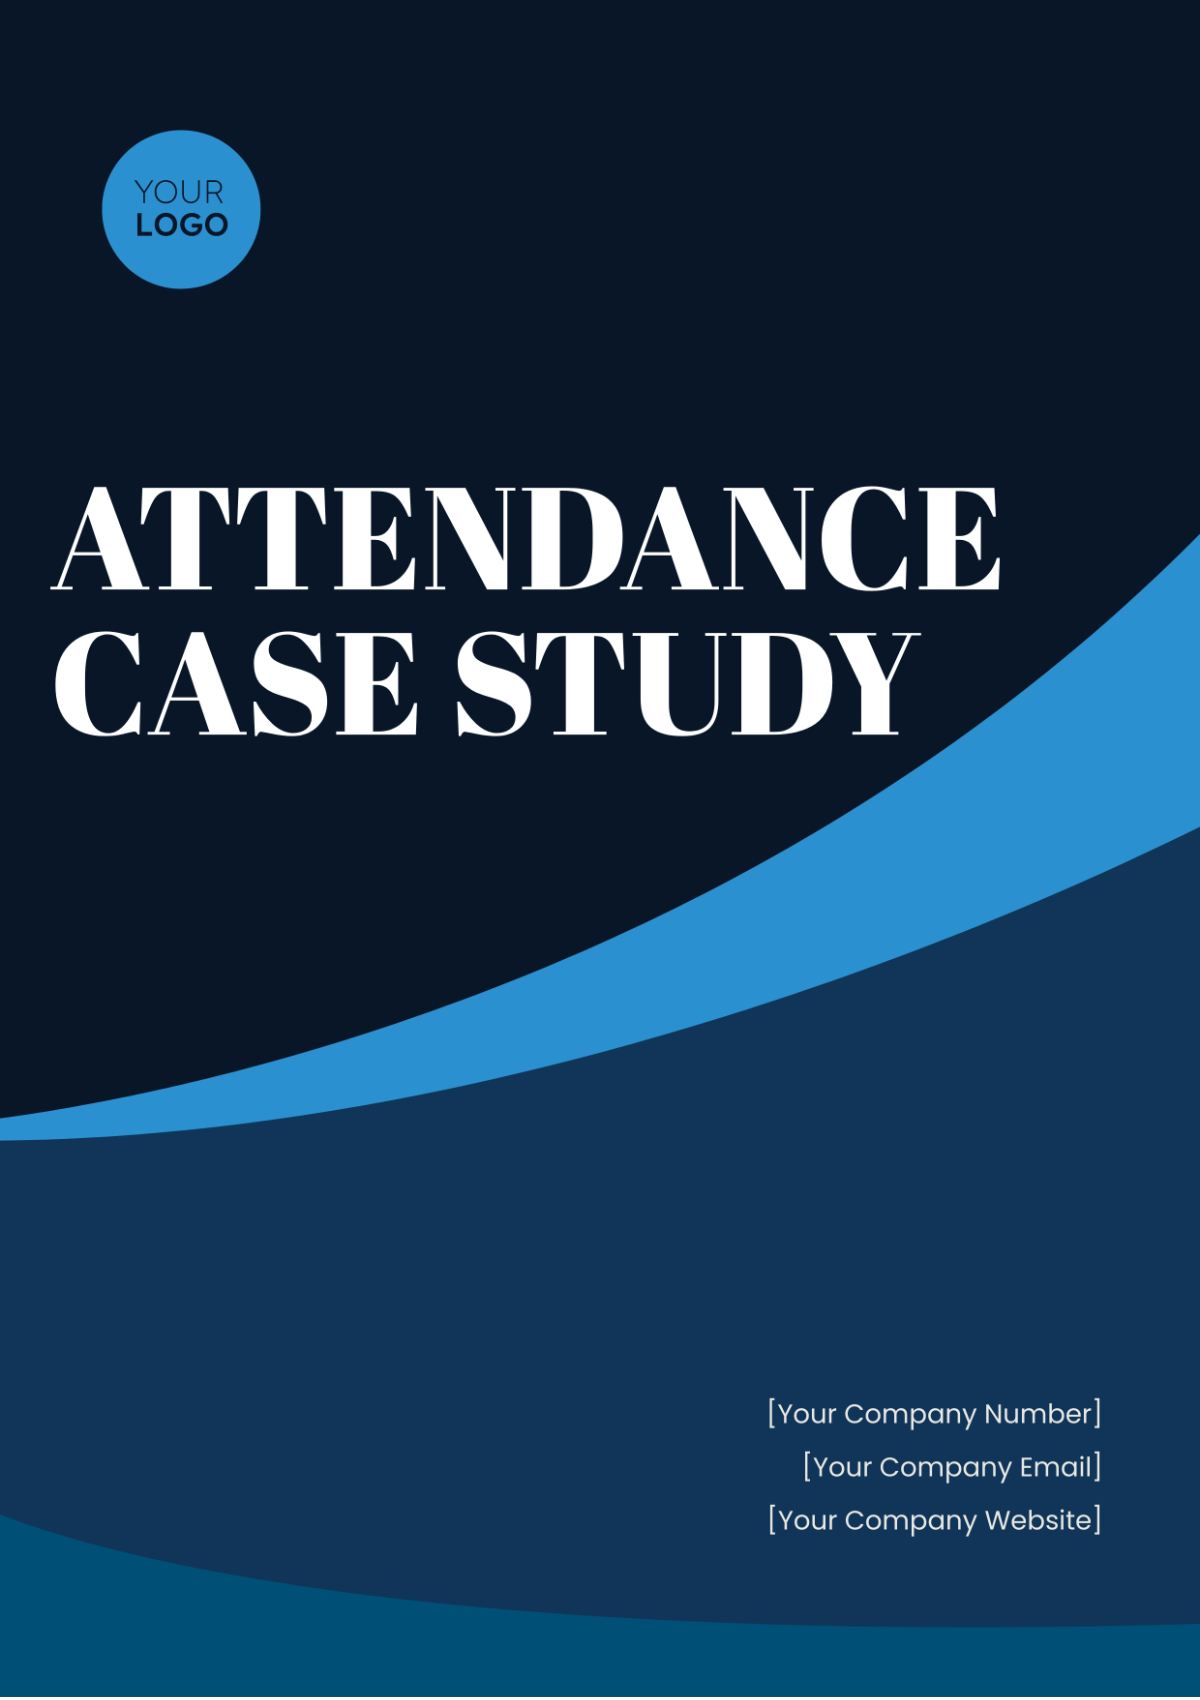 Attendance Case Study Template